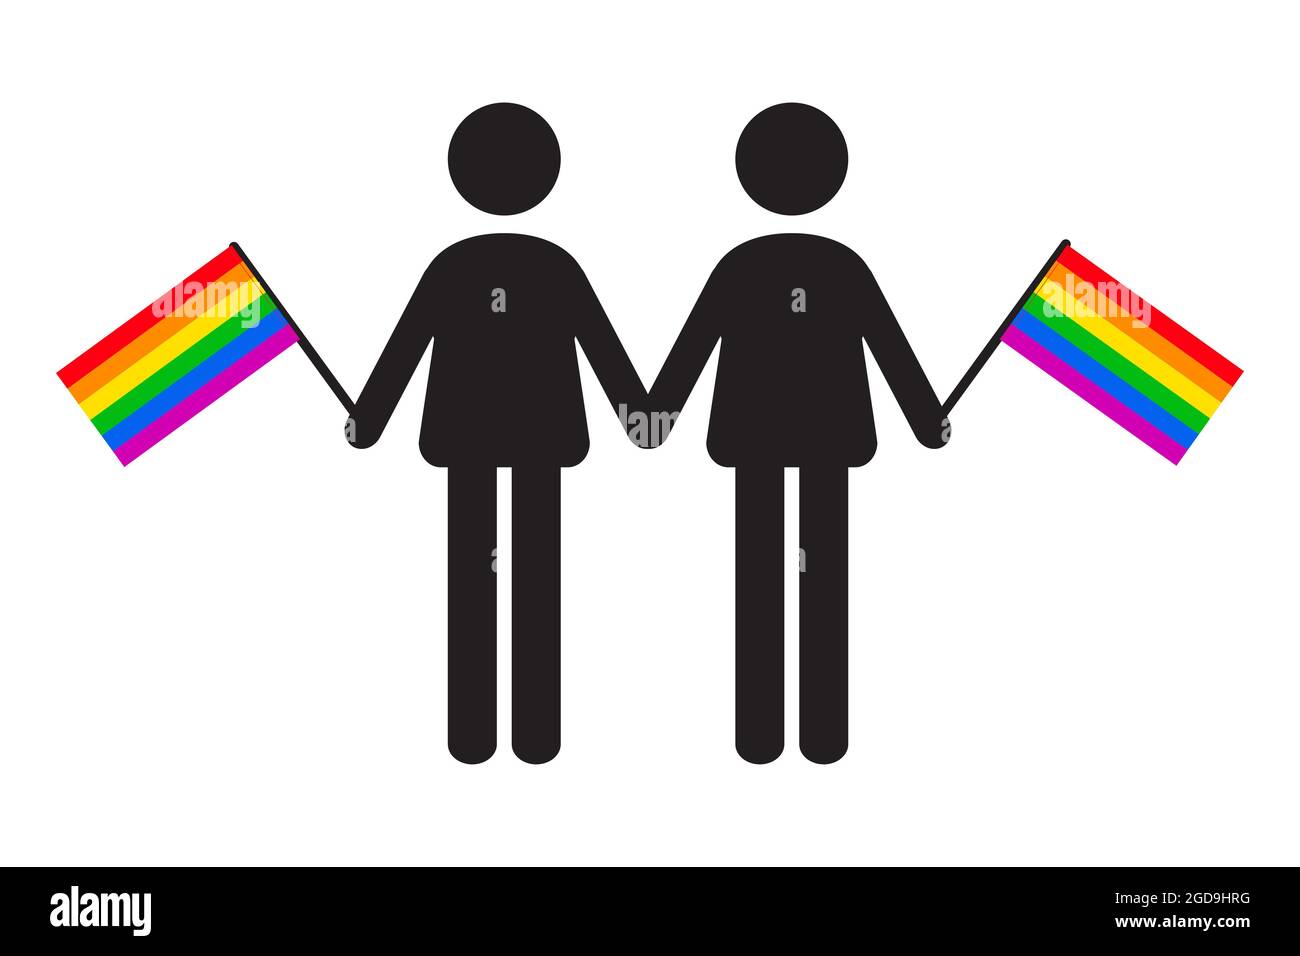 Two man icon holding Rainbow Gay flag. LGBTQ pride icon vector illustration Stock Vector